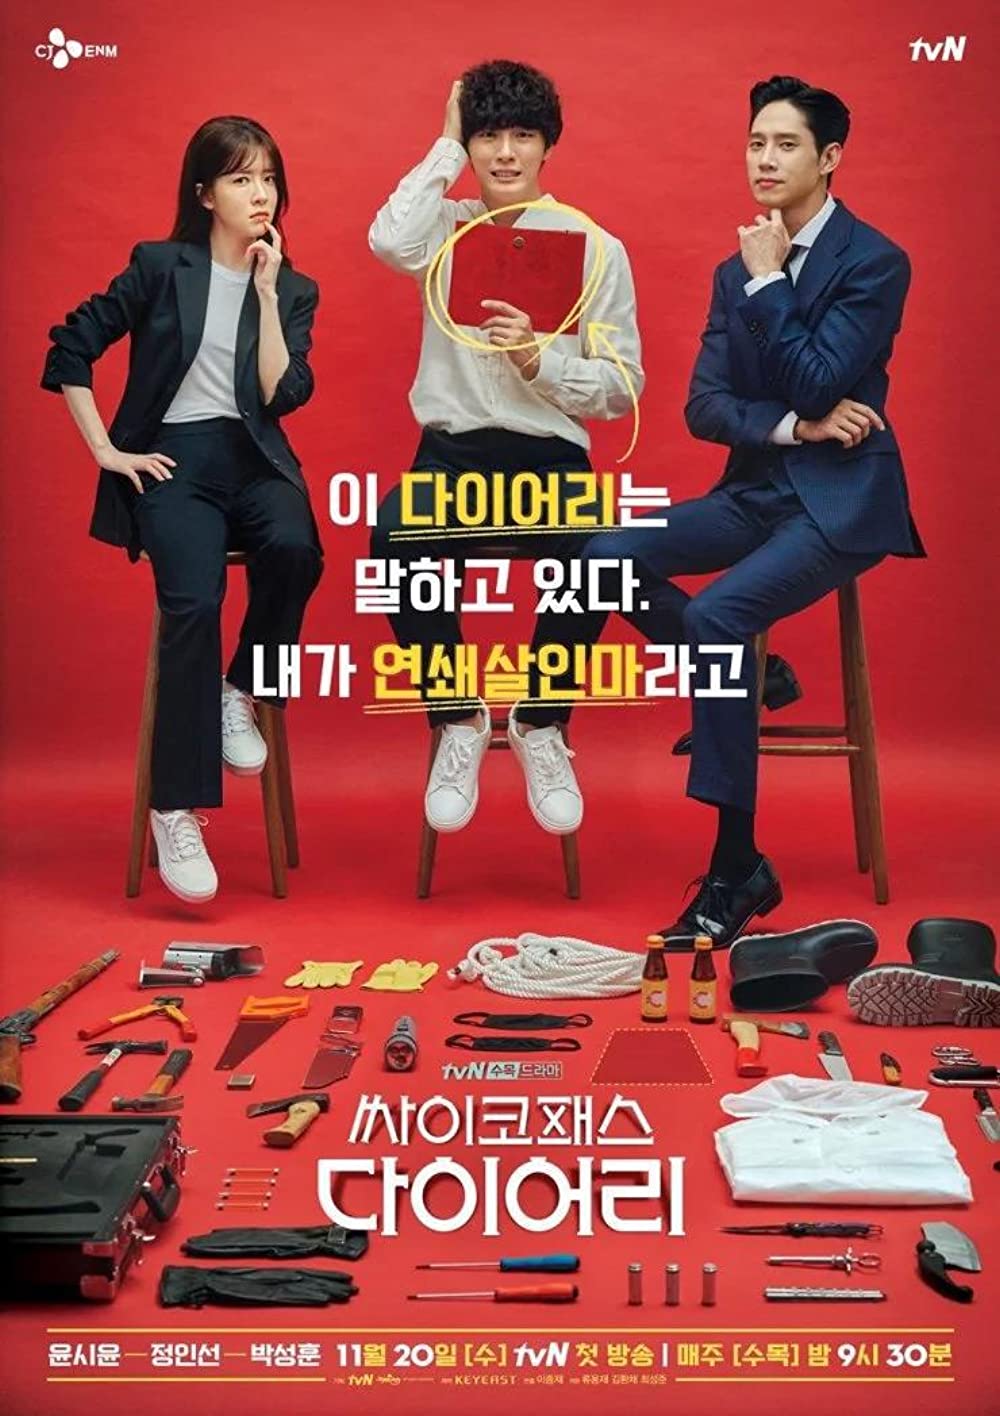 11 Drama Korea komedi bertema dark joke, lucu sekaligus bikin mikir